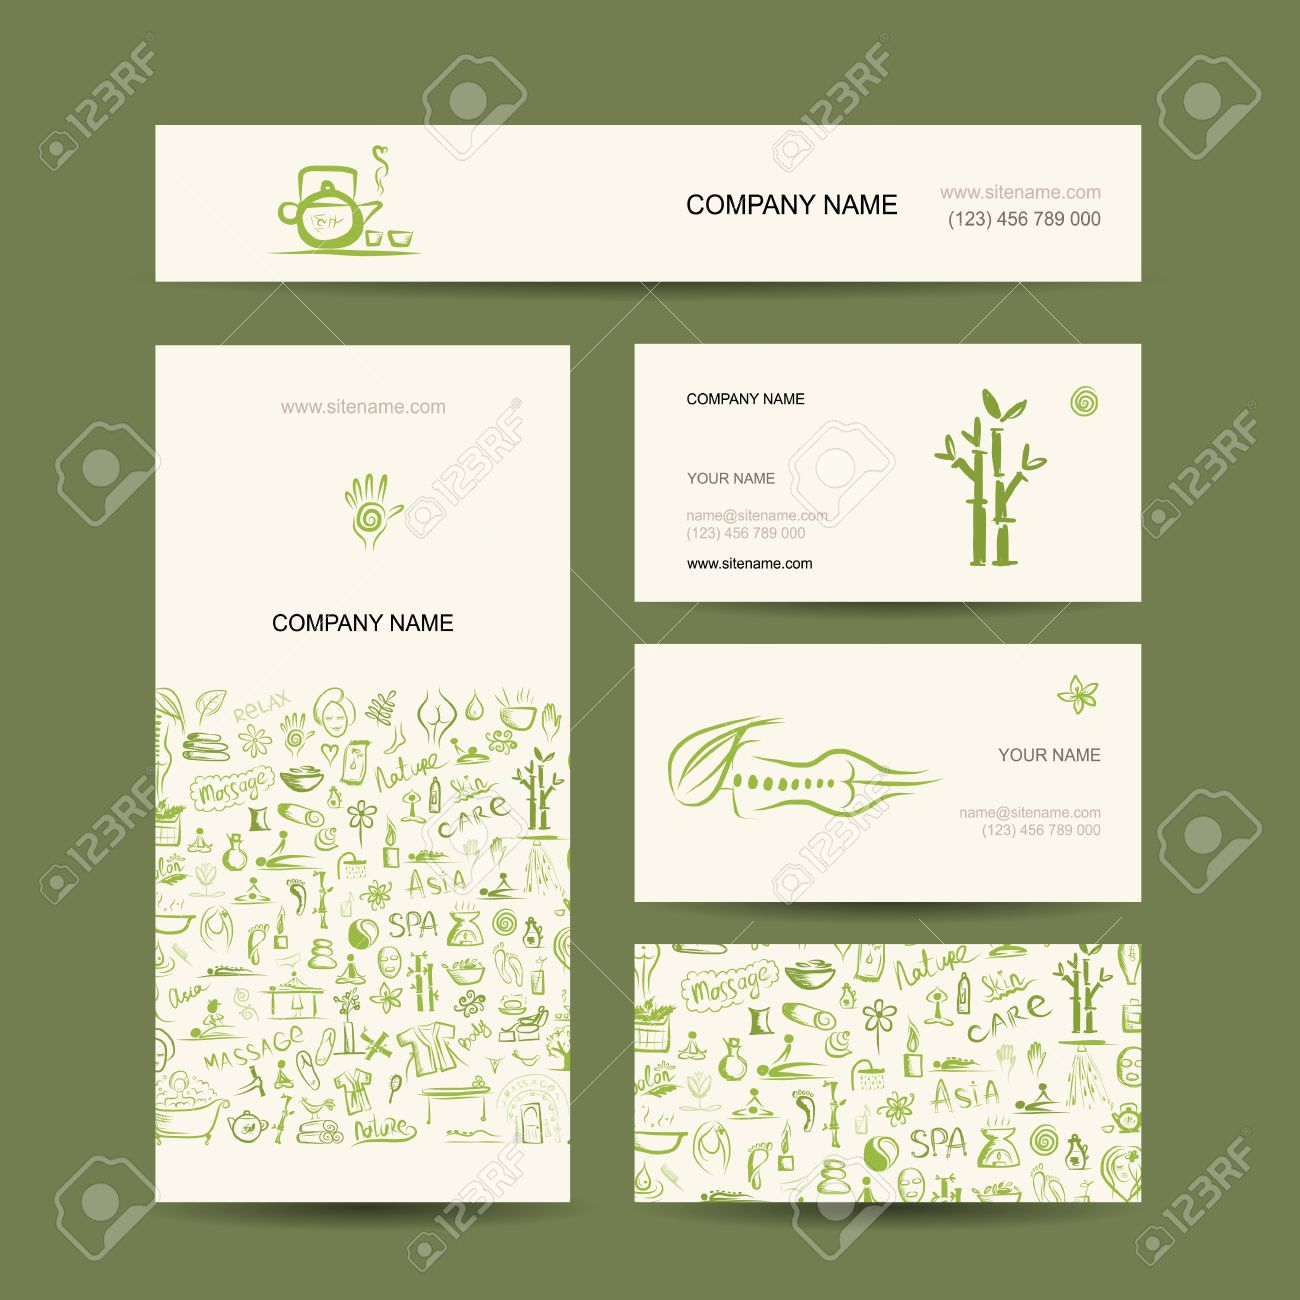 Massage Business Cards Templates ] – Massage Therapist Logo With Massage Therapy Business Card Templates